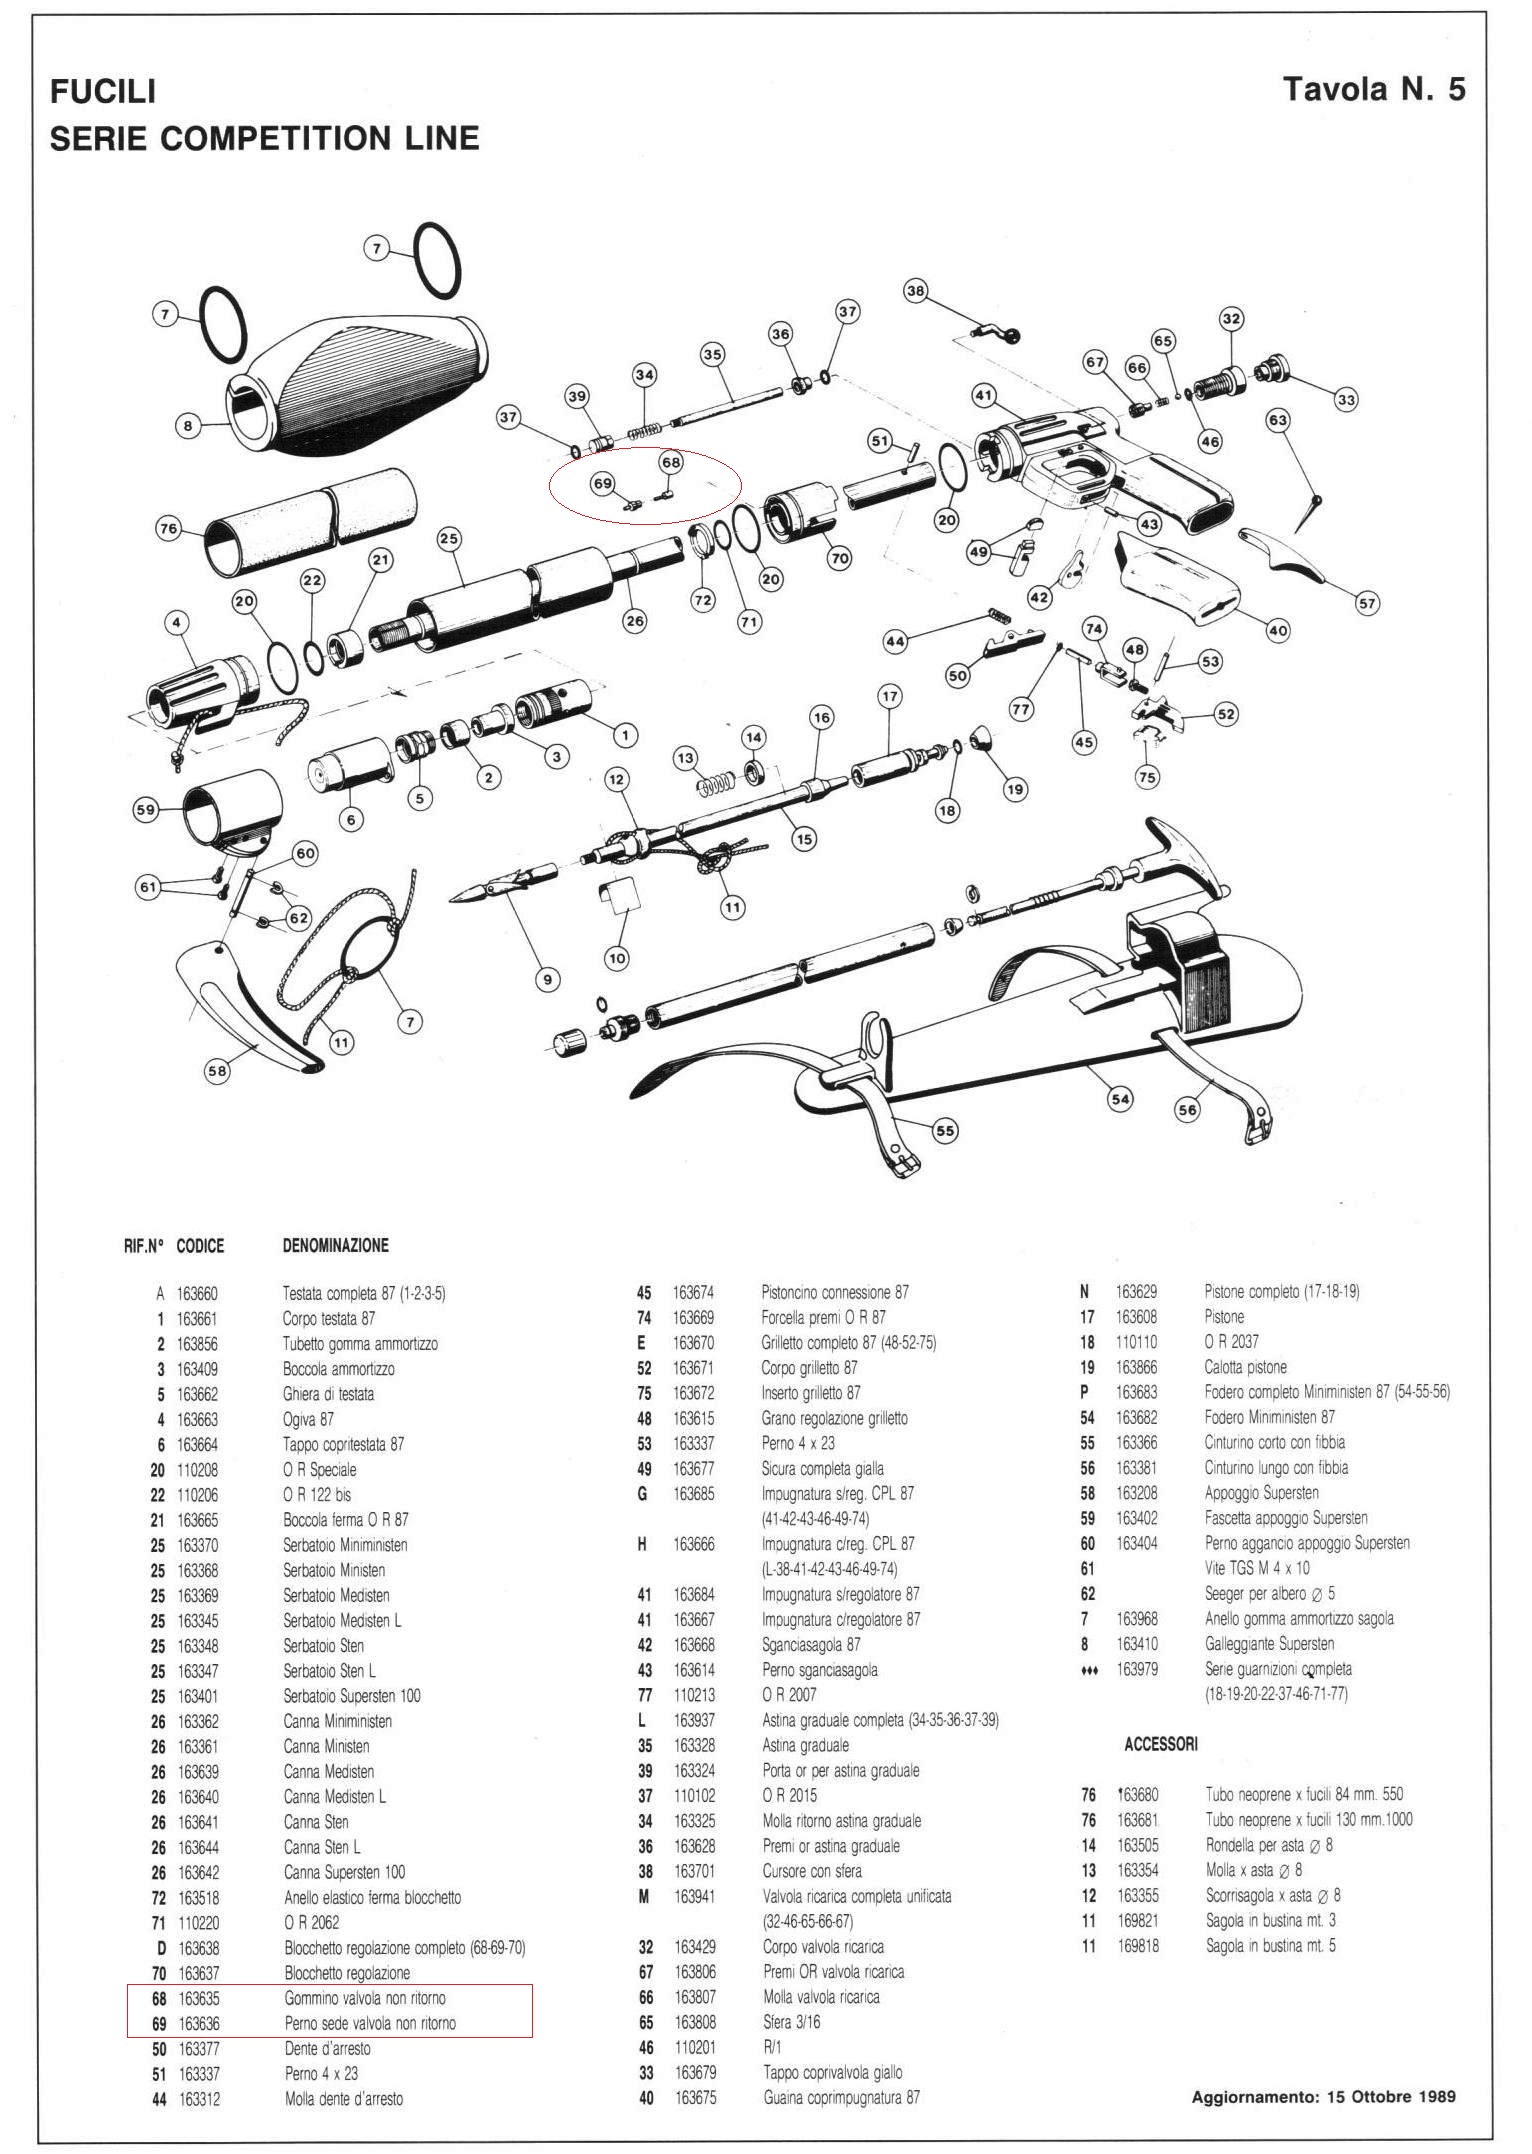 Sten Competition Line parts diagram non return valve.jpg